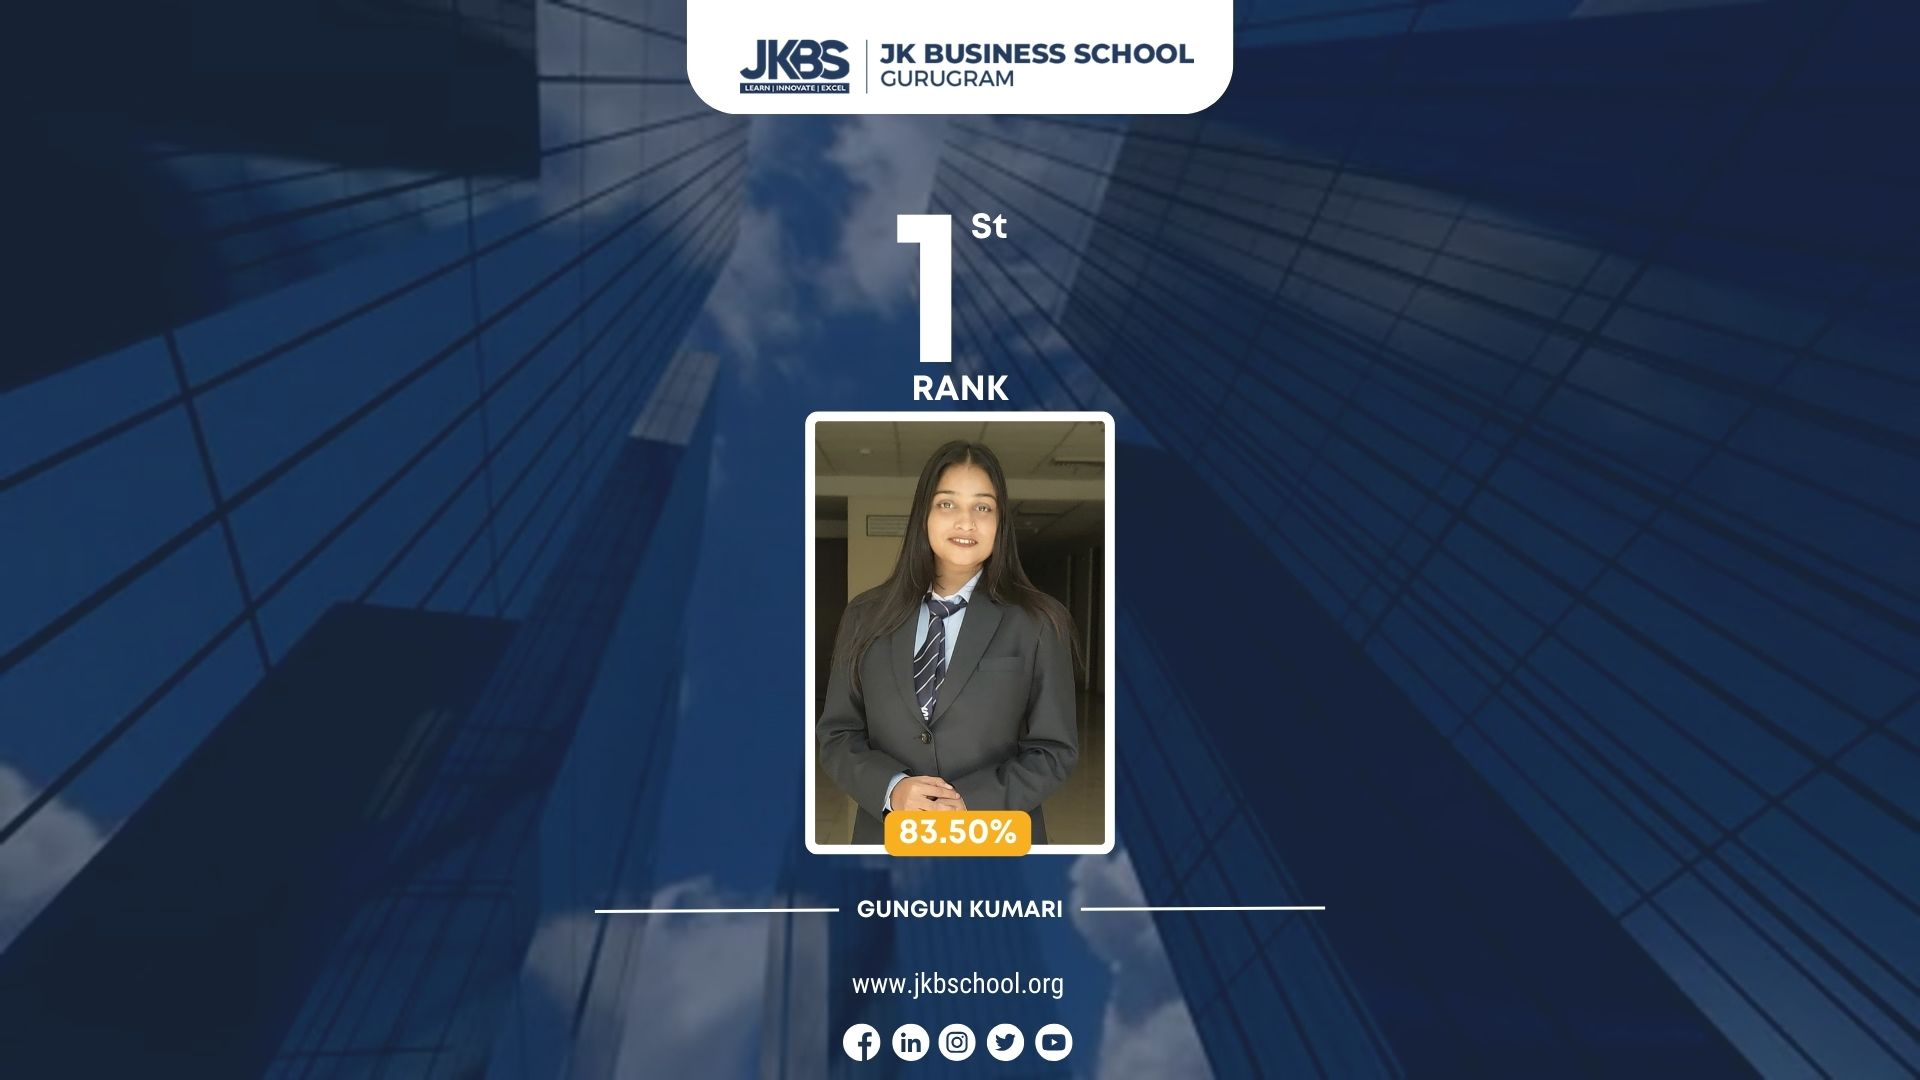 Gungun Kumari: Charting the Course to Excellence at JK Business School